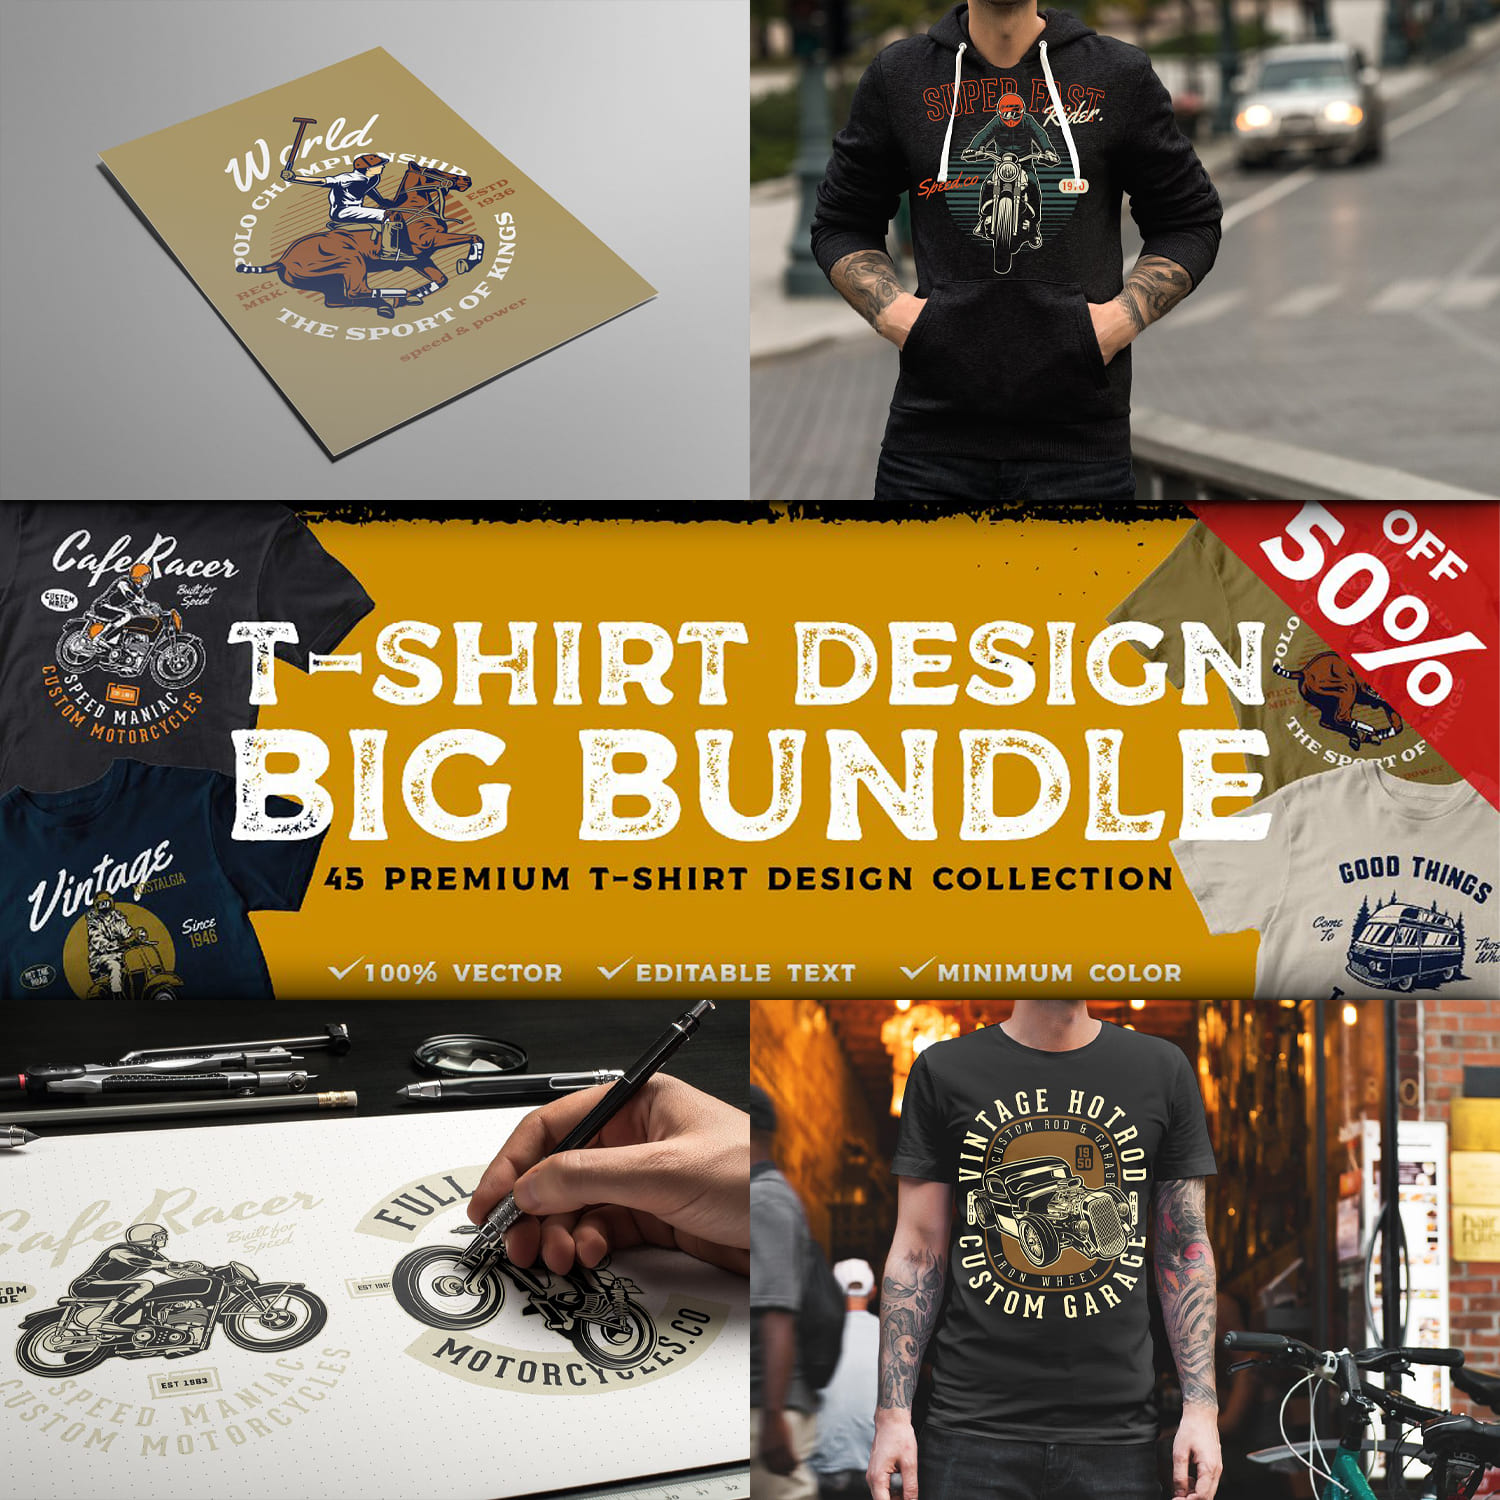 T-shirt Design BIG BUNDLE Cover.